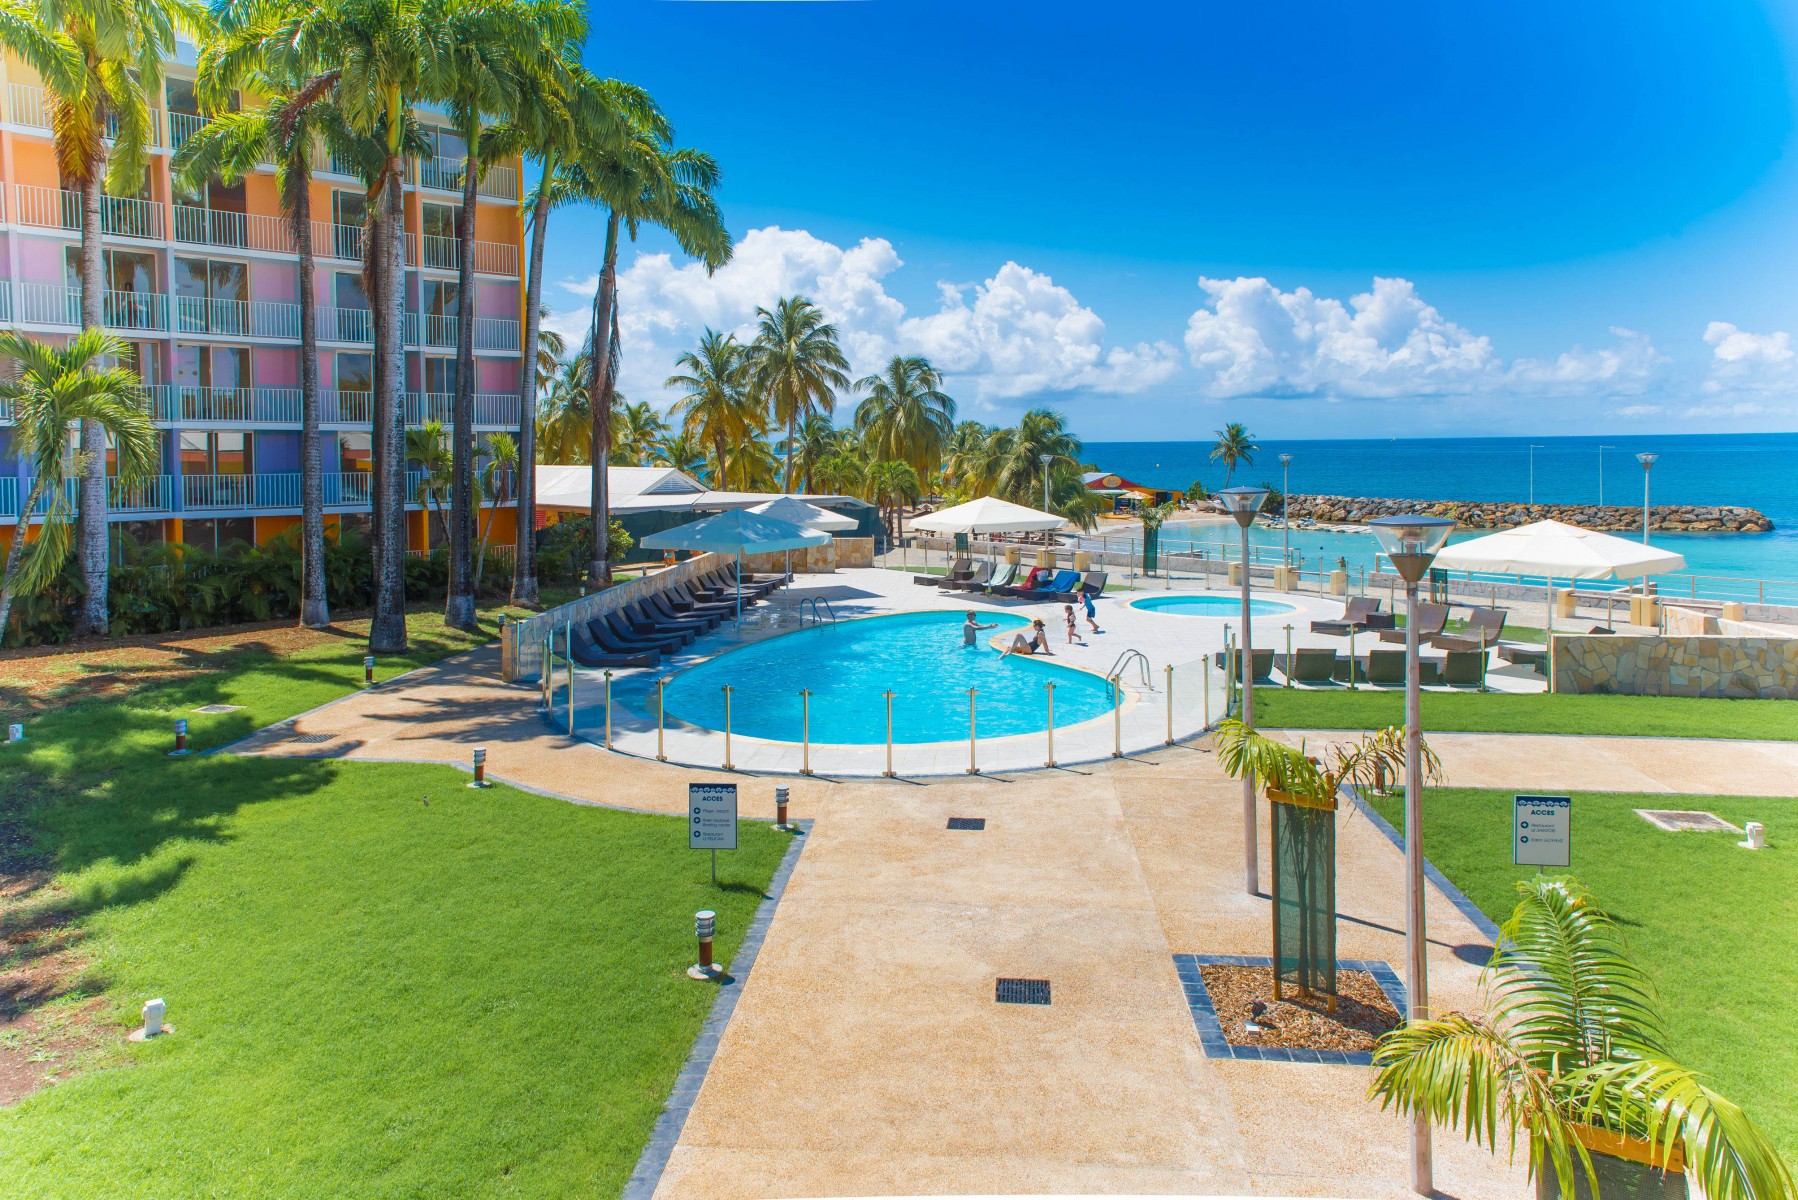 Karibea Beach Resort hotels in Gosier in Guadeloupe - Hotels in Karibea